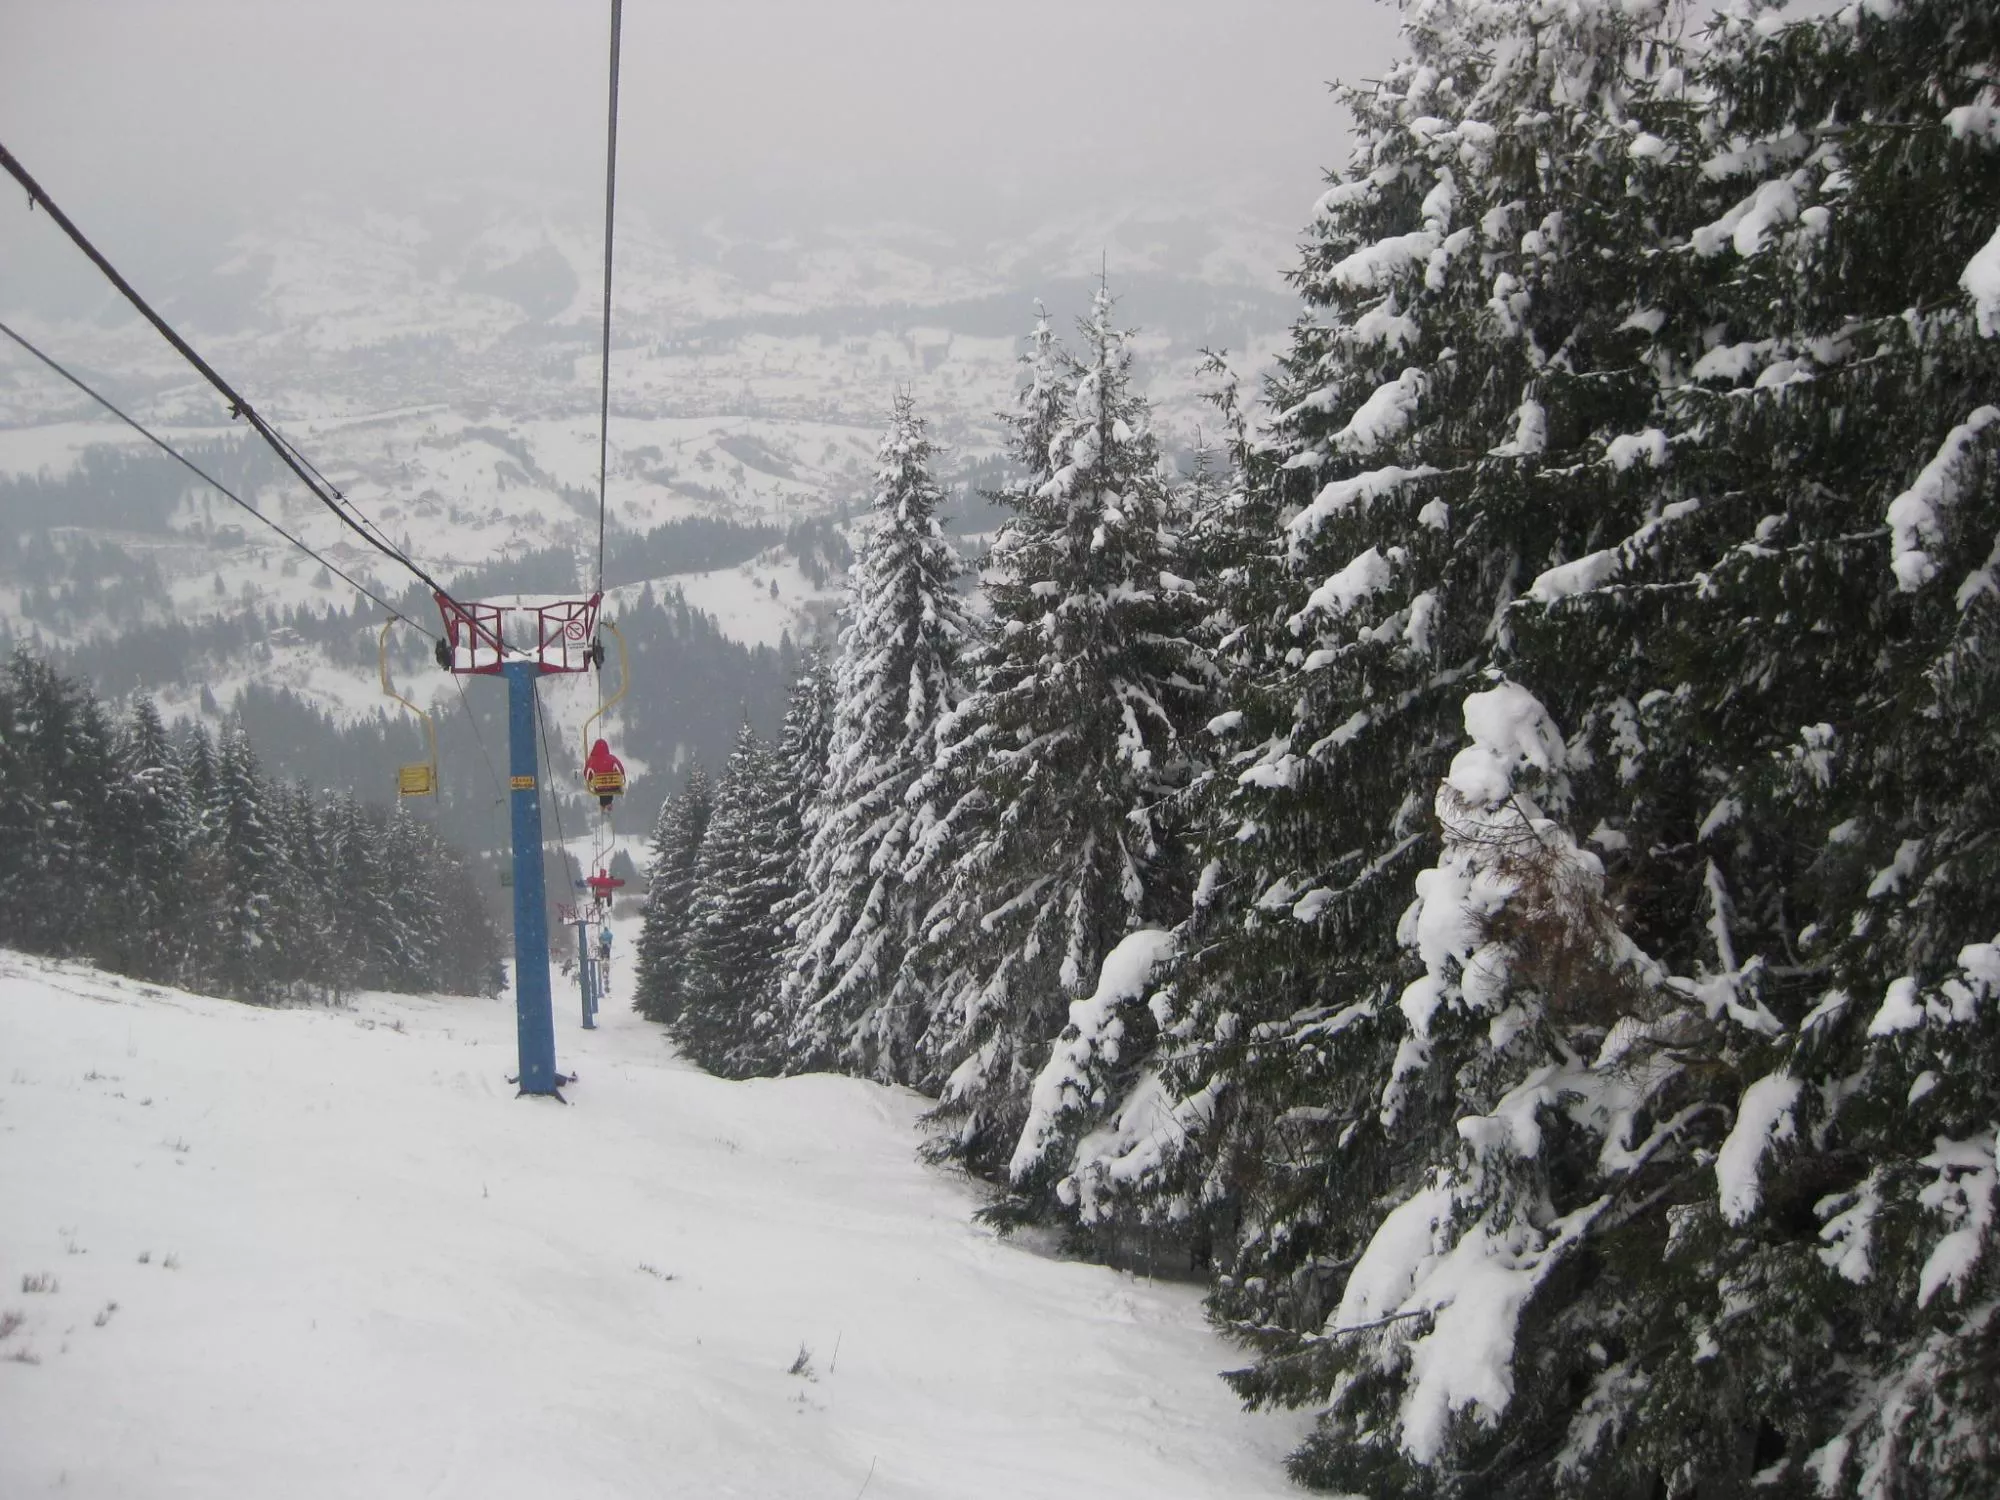 Slavske in Ukraine, Europe | Snowboarding,Skiing,Snowmobiling - Rated 4.7